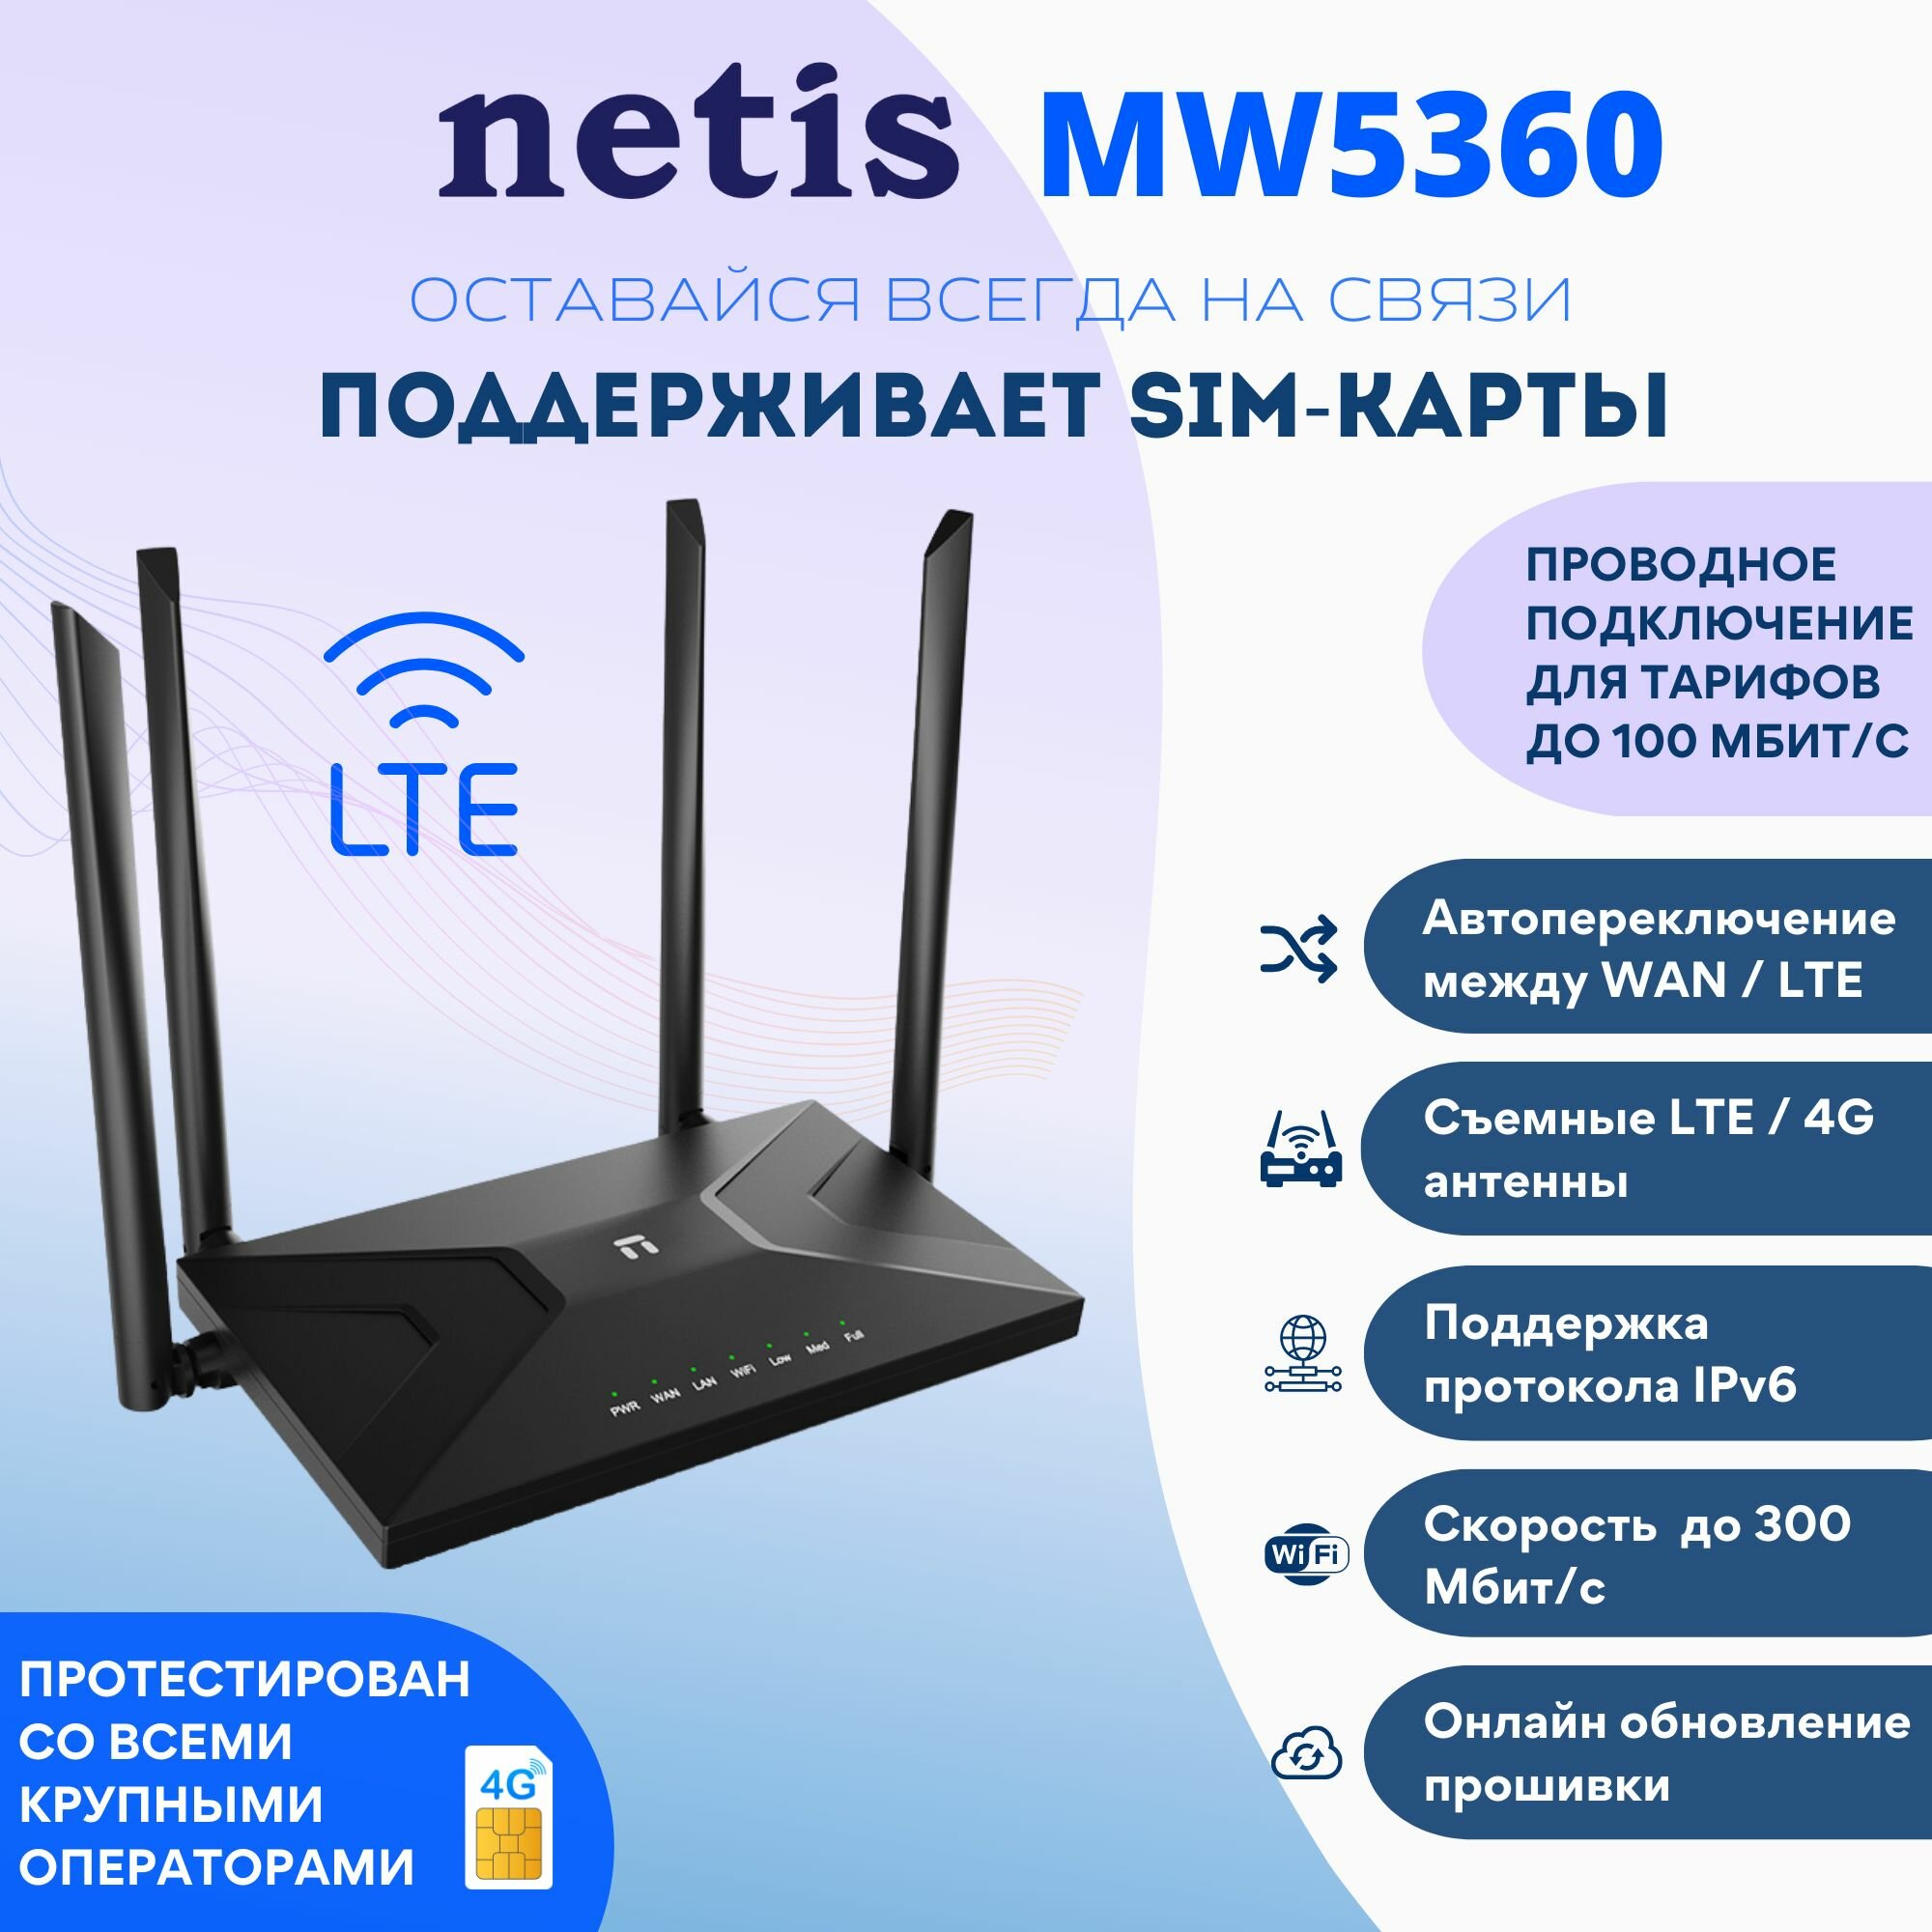 Wi-Fi 4G LTE Маршрутизатор NETIS MW5360